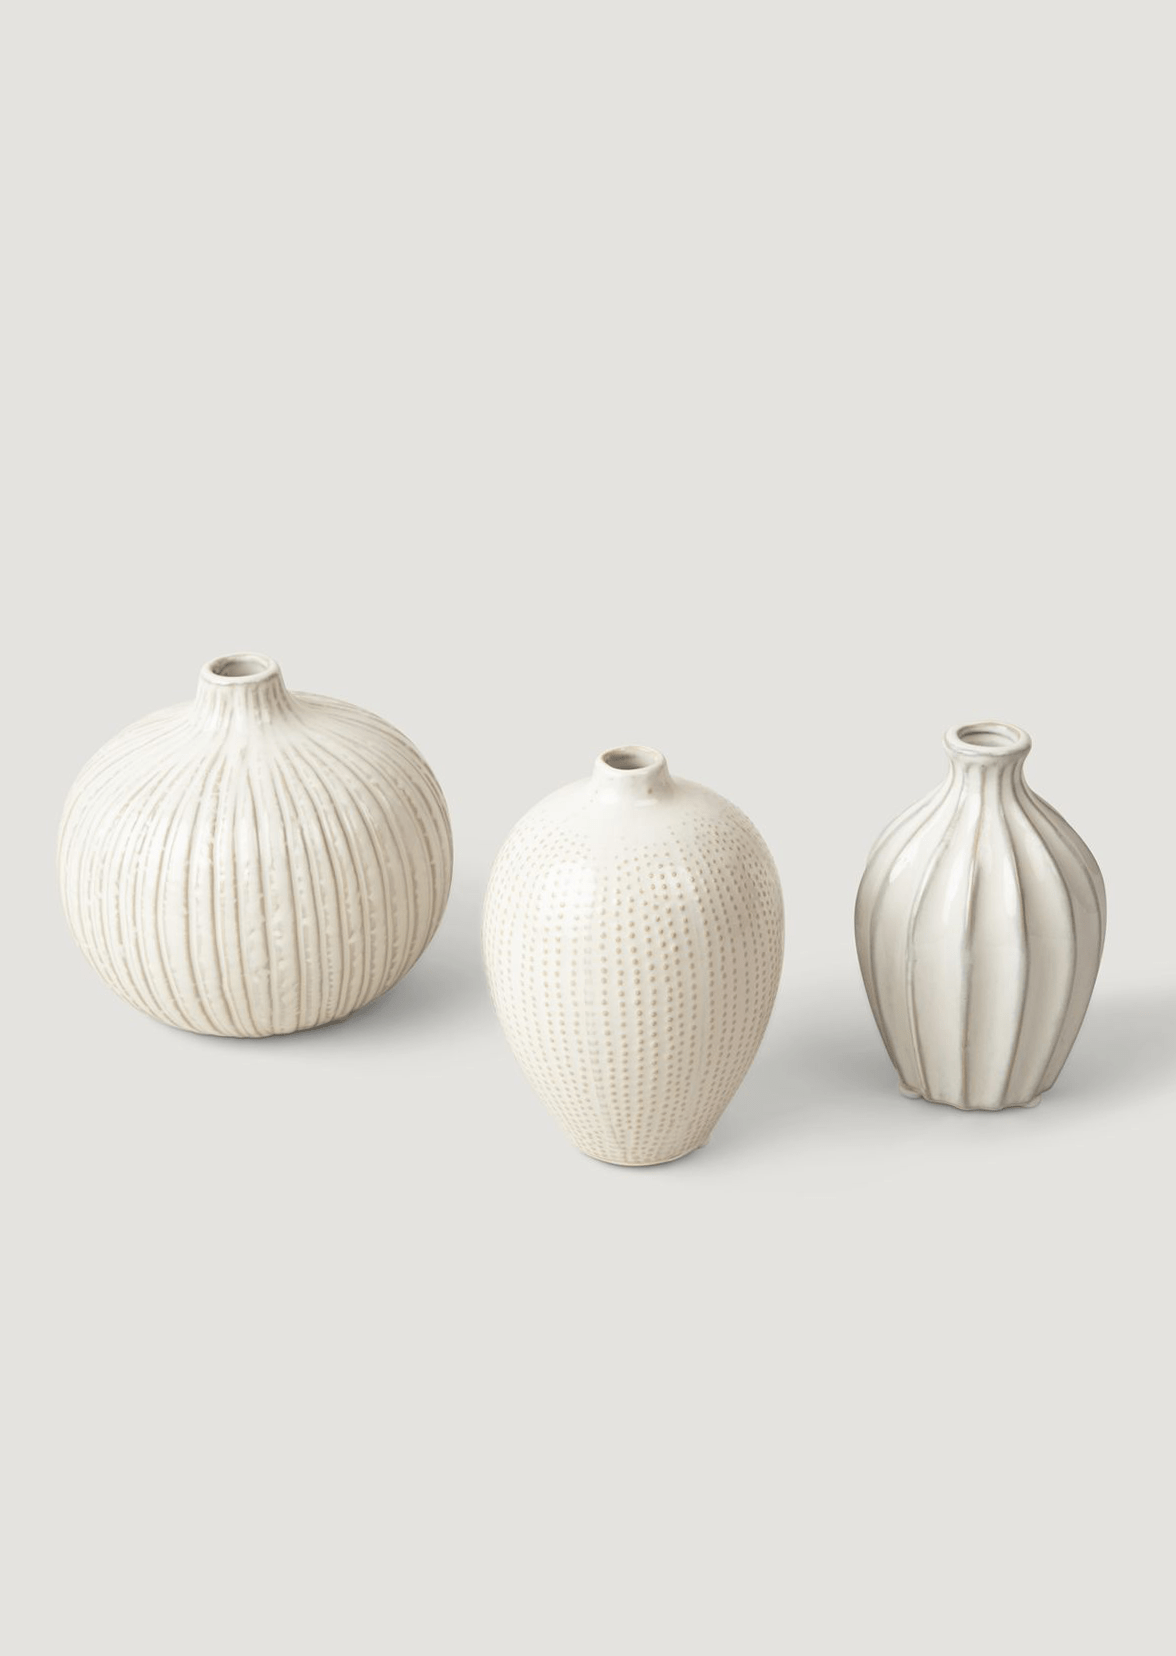 Set of 3 Textured Bud Vases in White Ceramic at Afloral